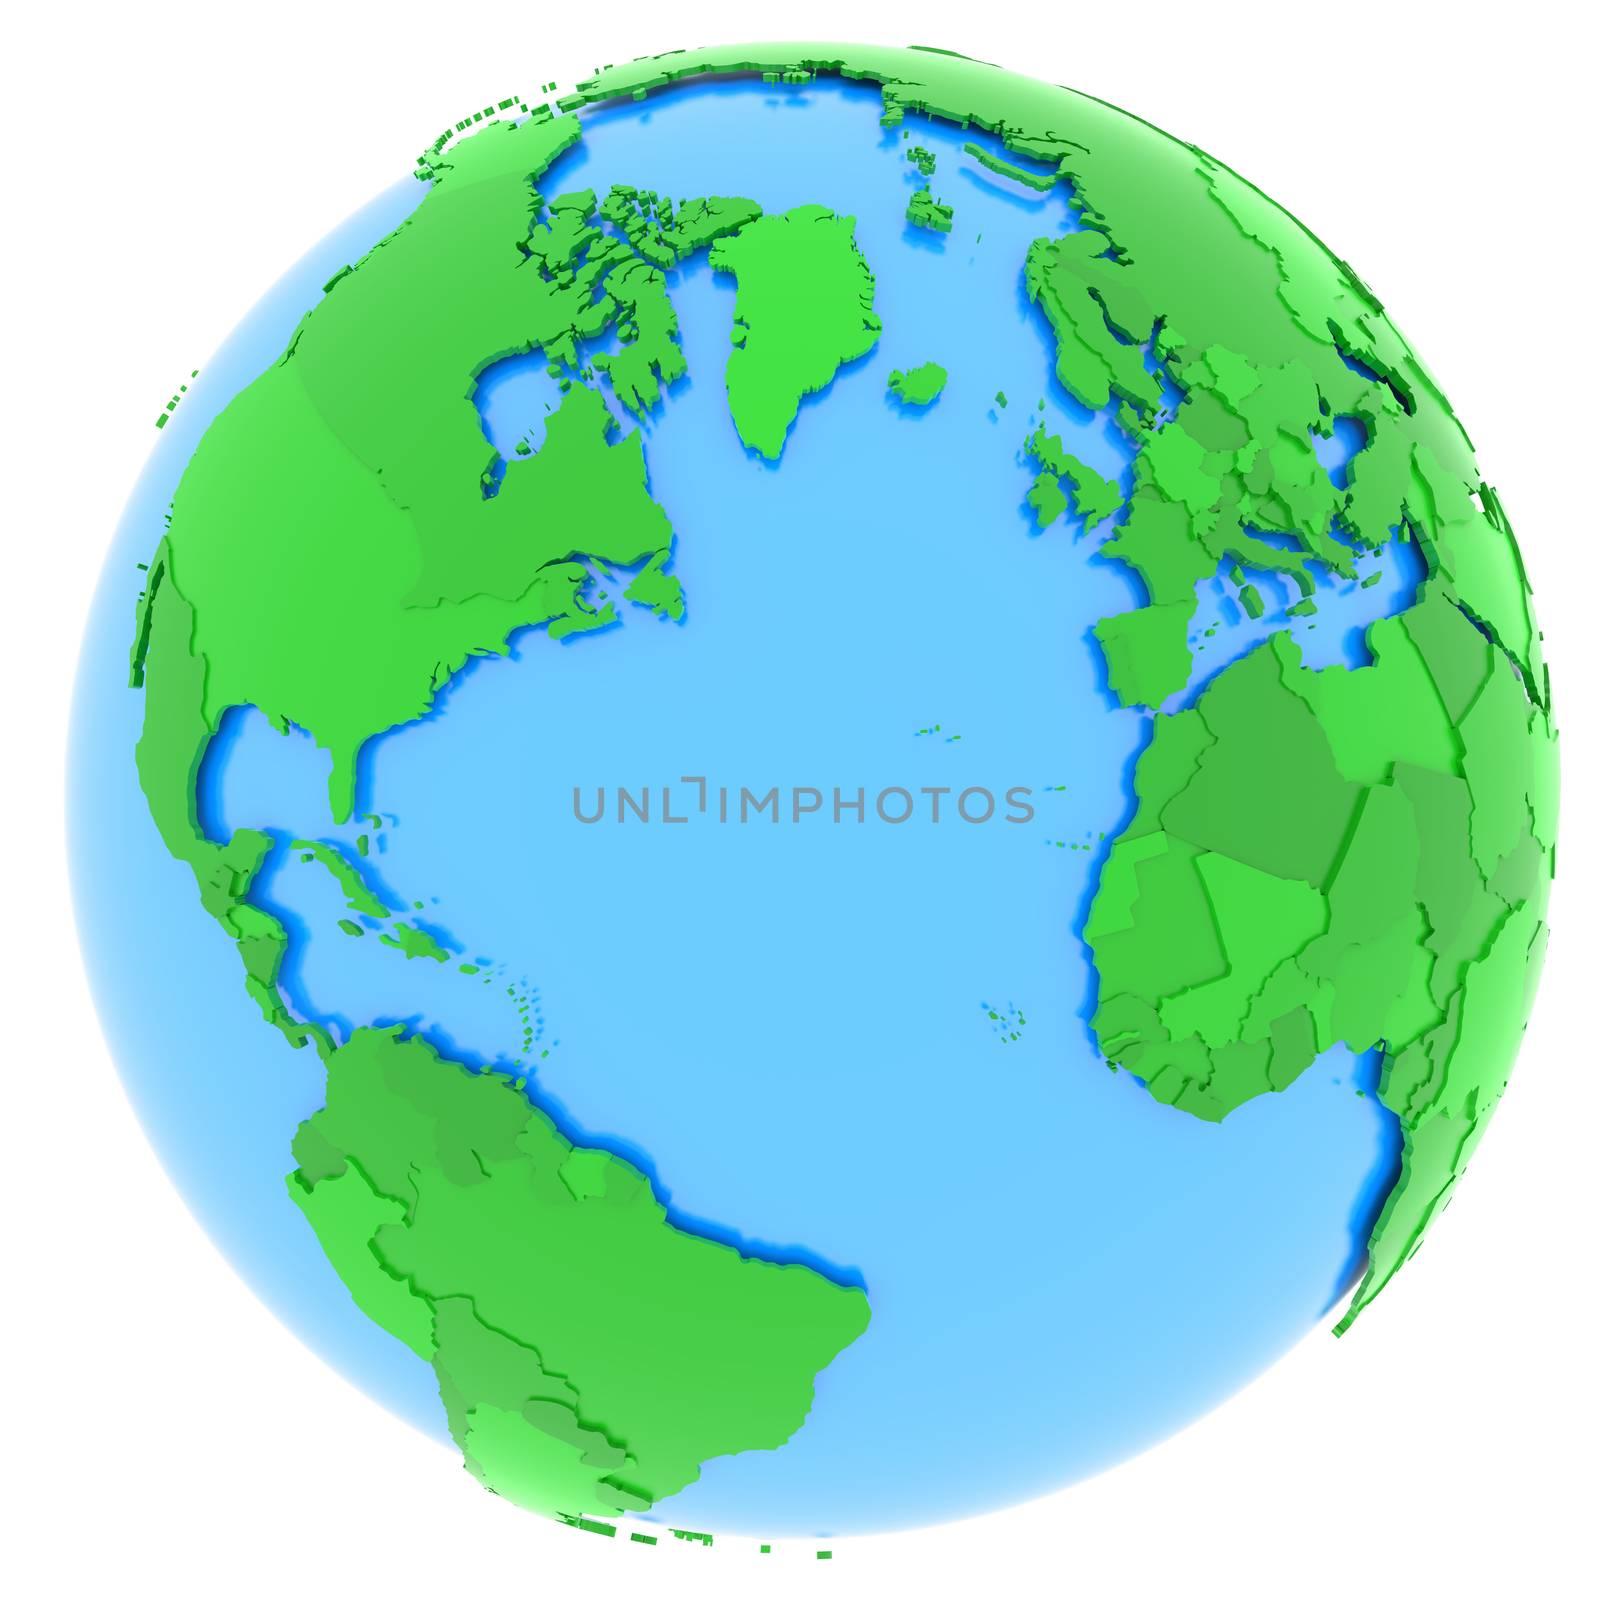 Western hemisphere on Earth by Harvepino